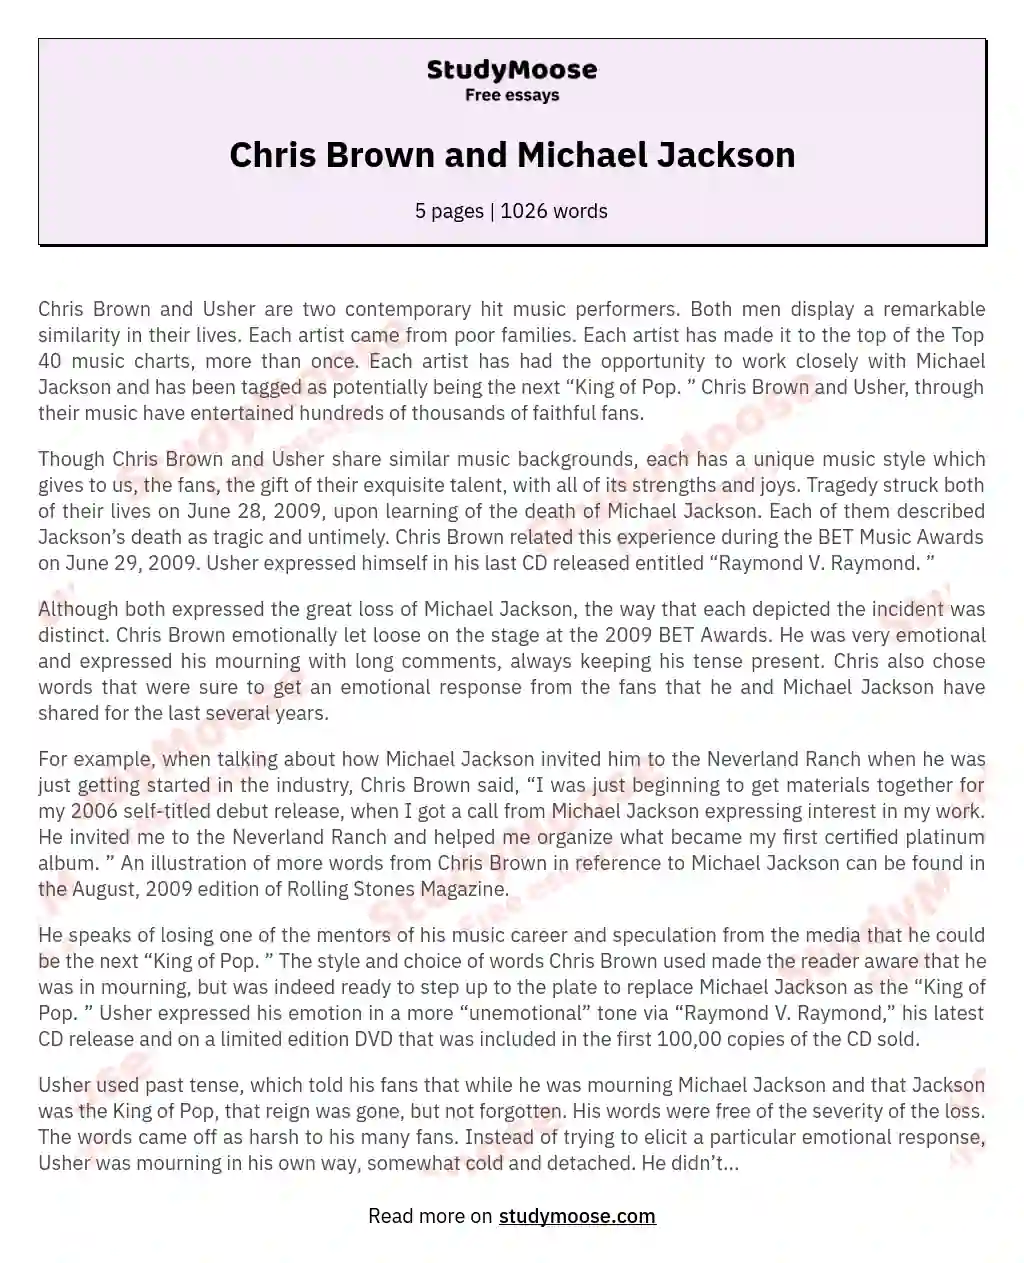 Chris Brown and Michael Jackson essay